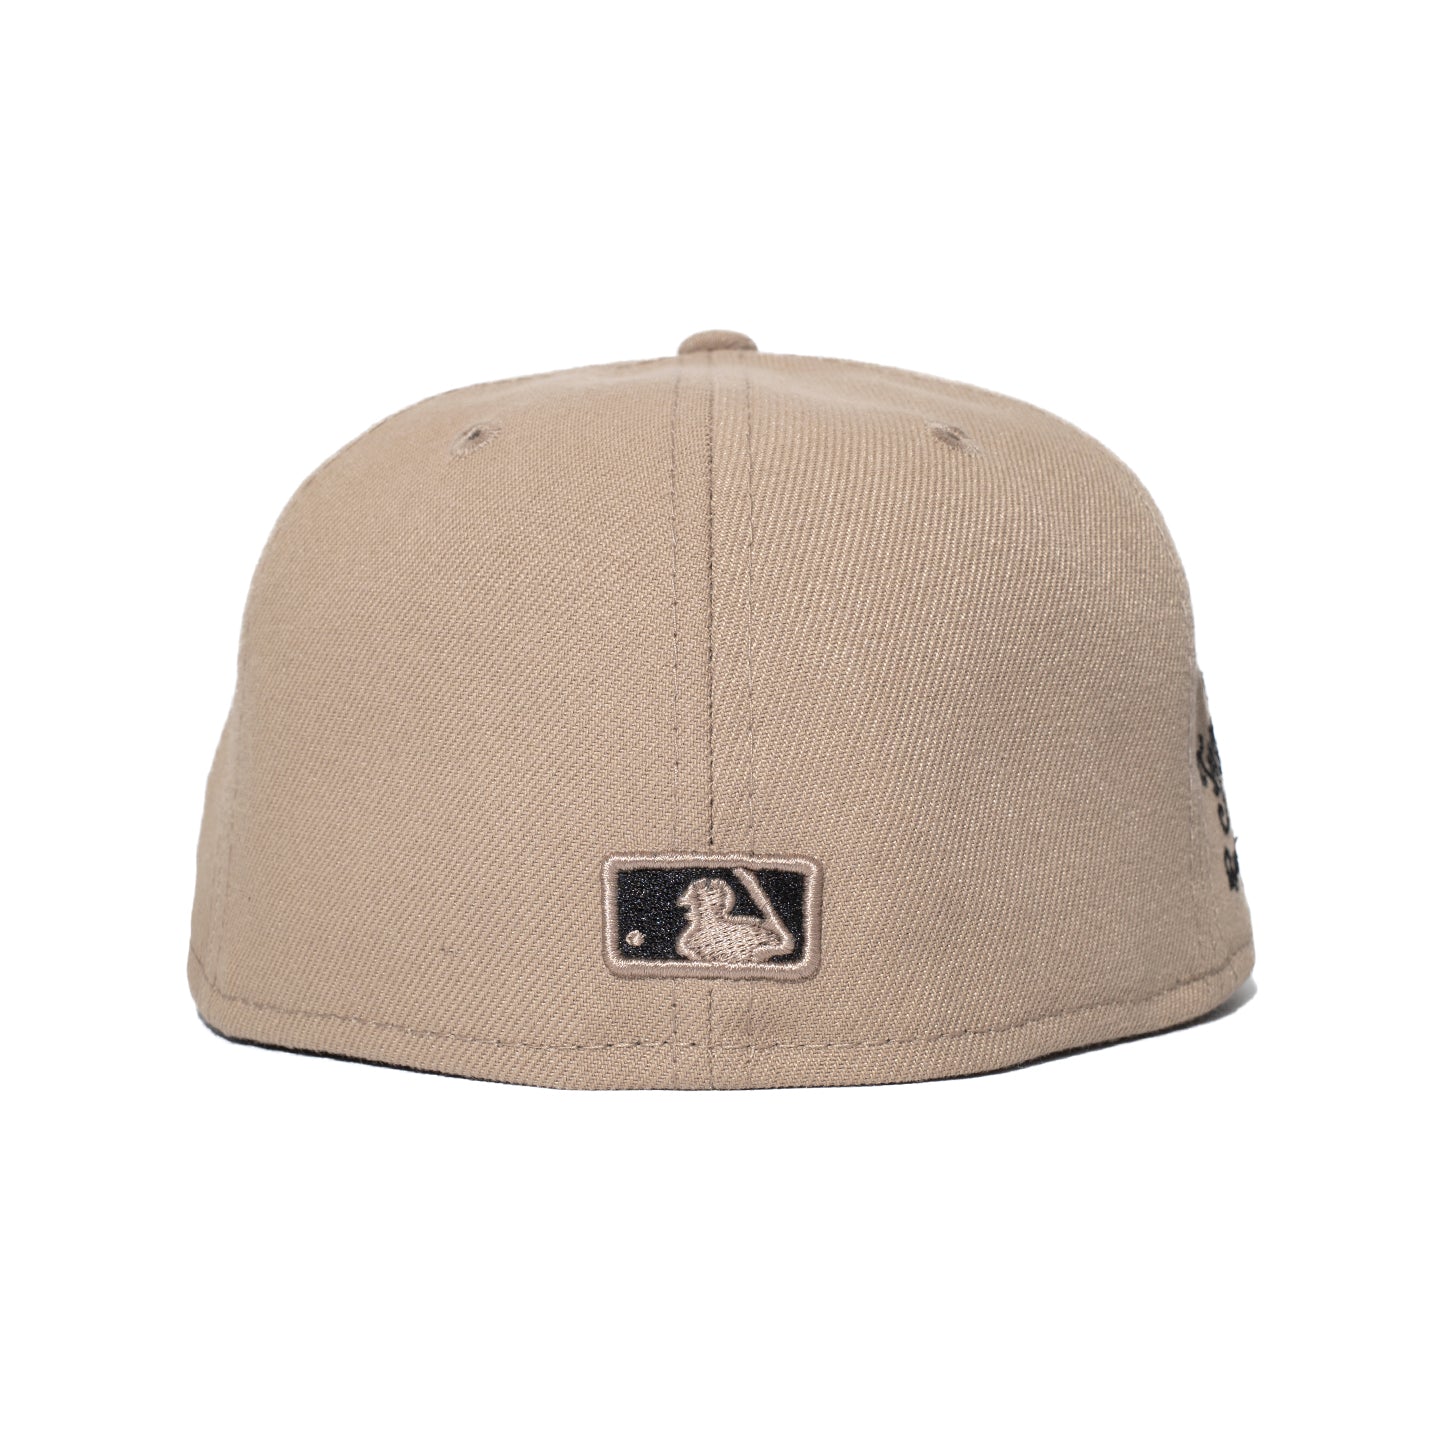 Atlanta Braves MLB Team lightweigth New Era 9fifty camel cap